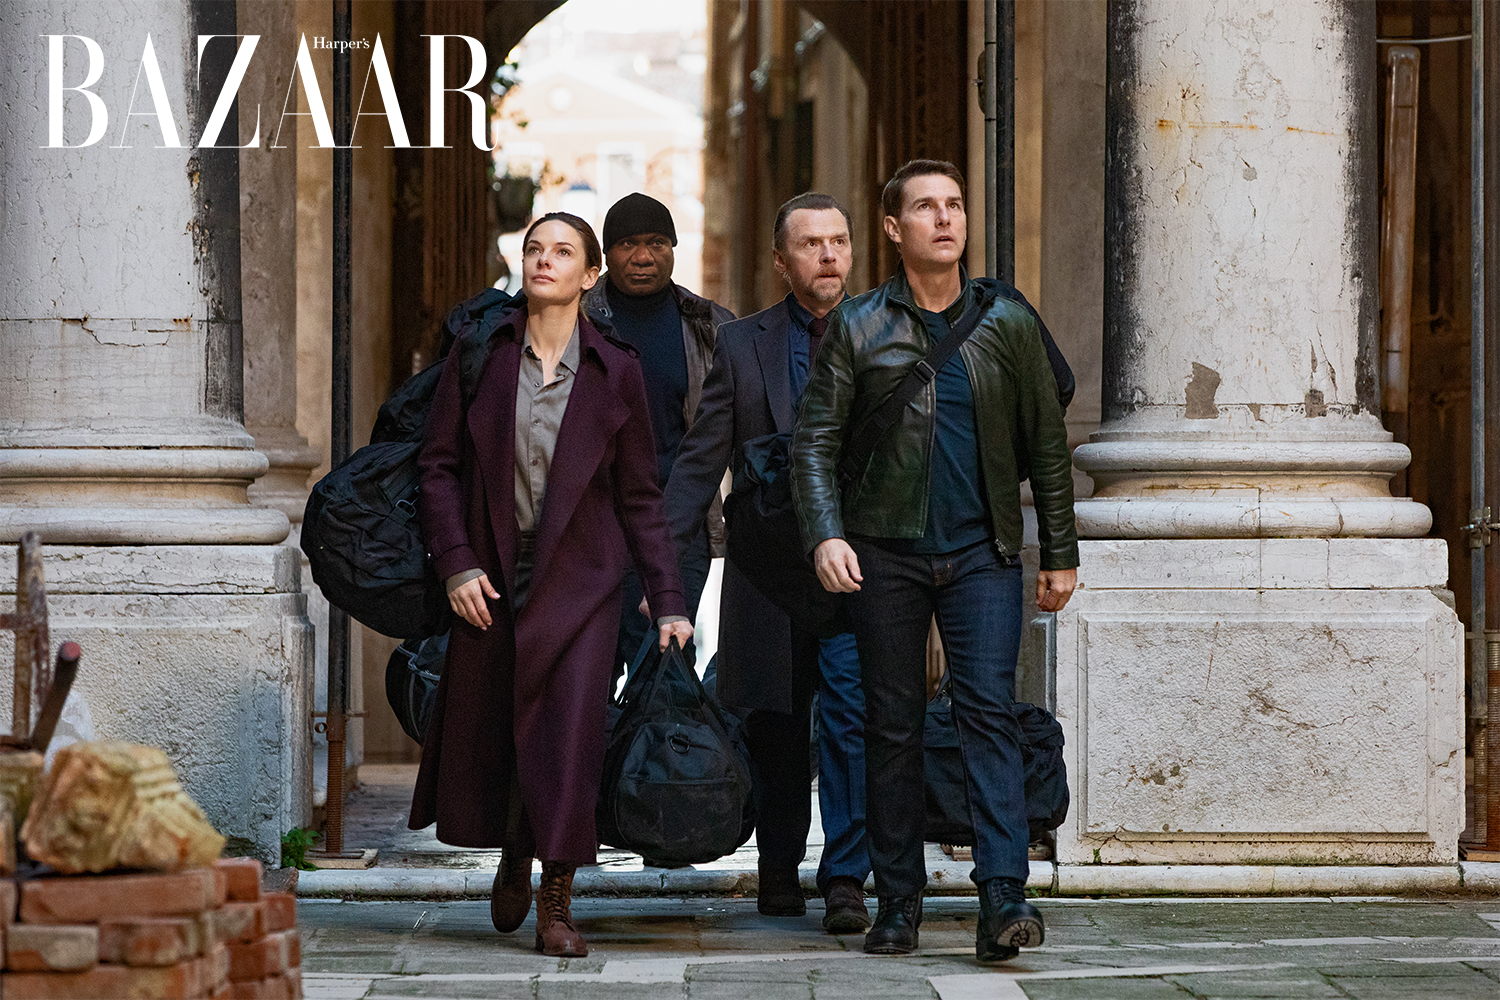 Harper's Bazaar_Bom tấn Nhiệm Vụ Bất Khả Thi 7 của Tom Cruise_04